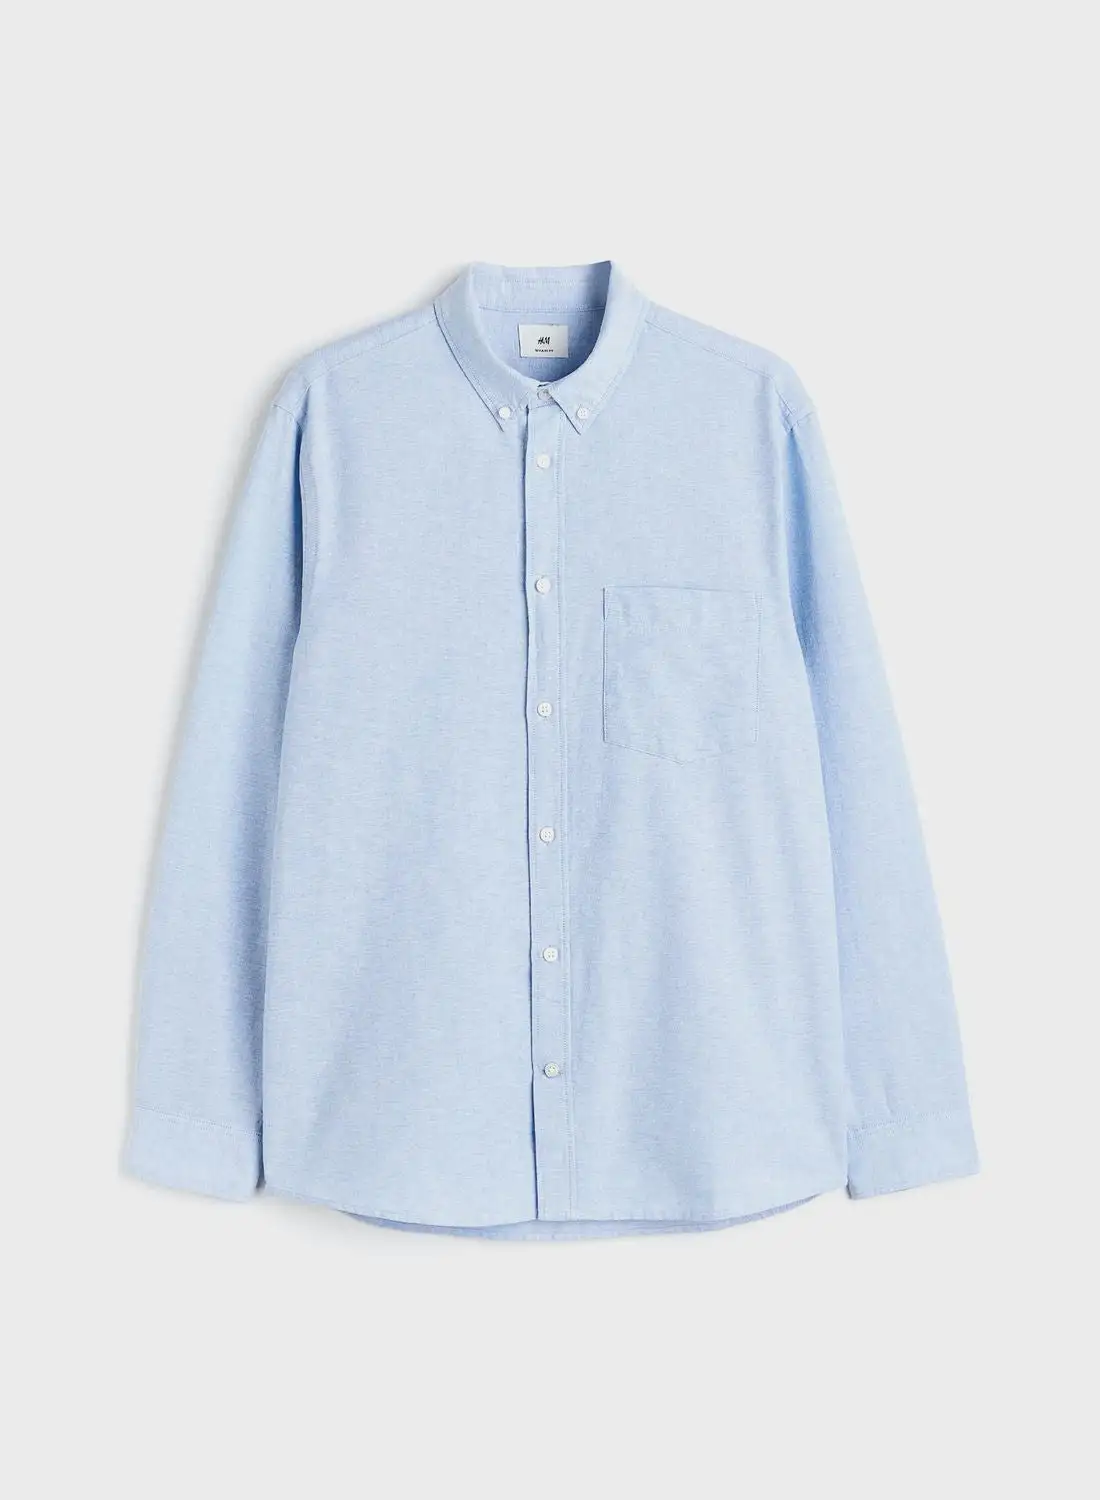 H&M Essential Regular Fit Oxford Shirt